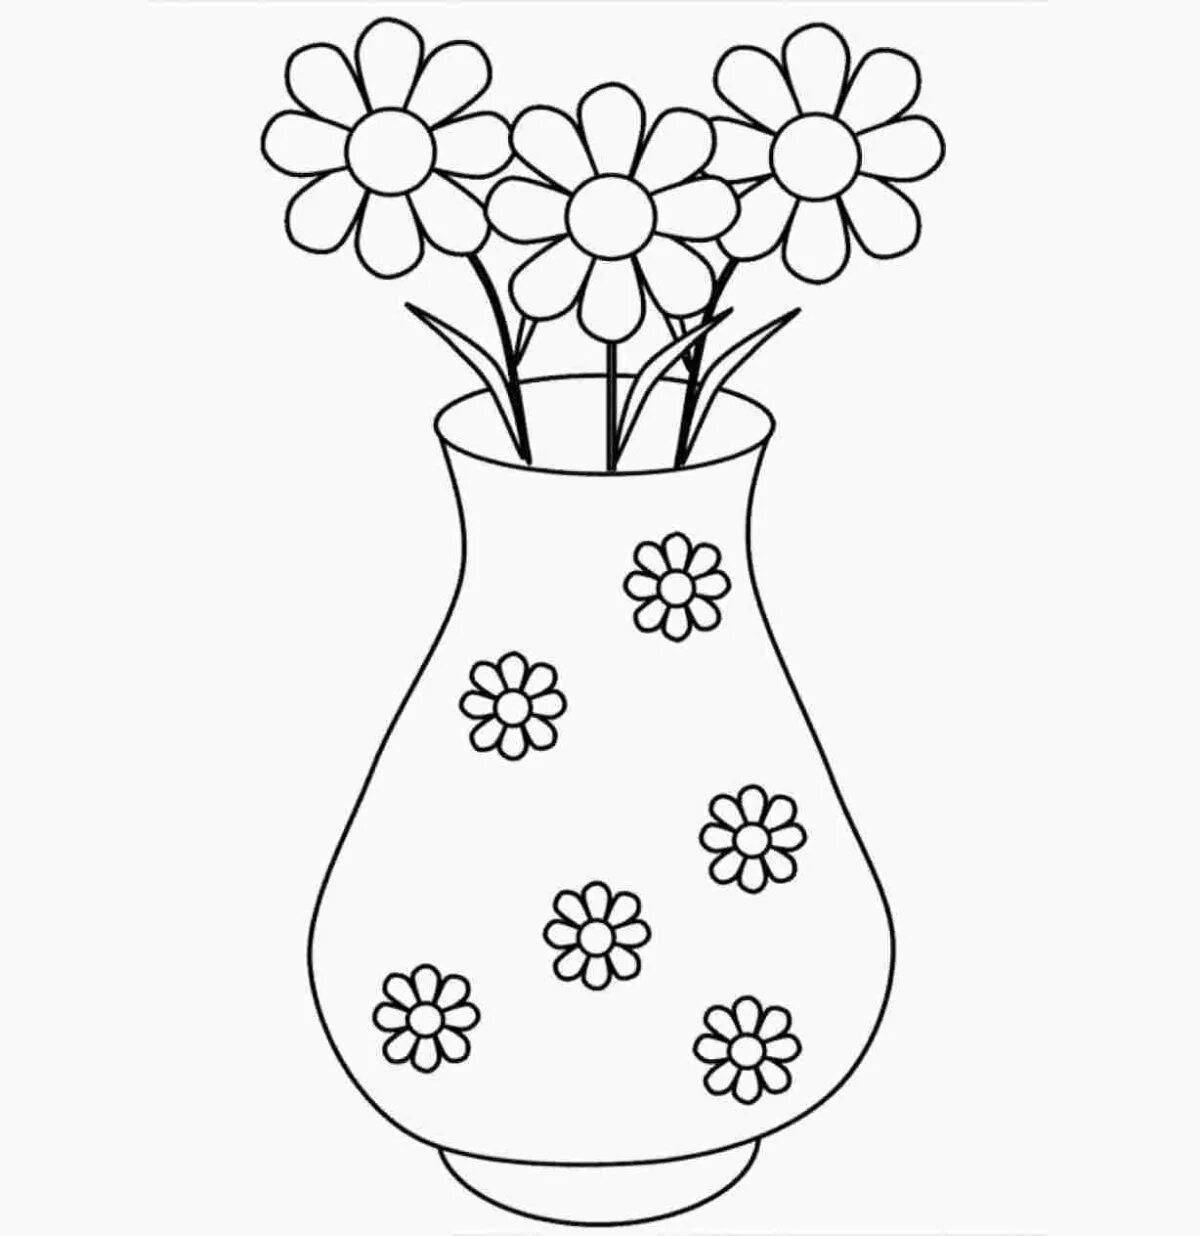 Fancy coloring flowers in a vase